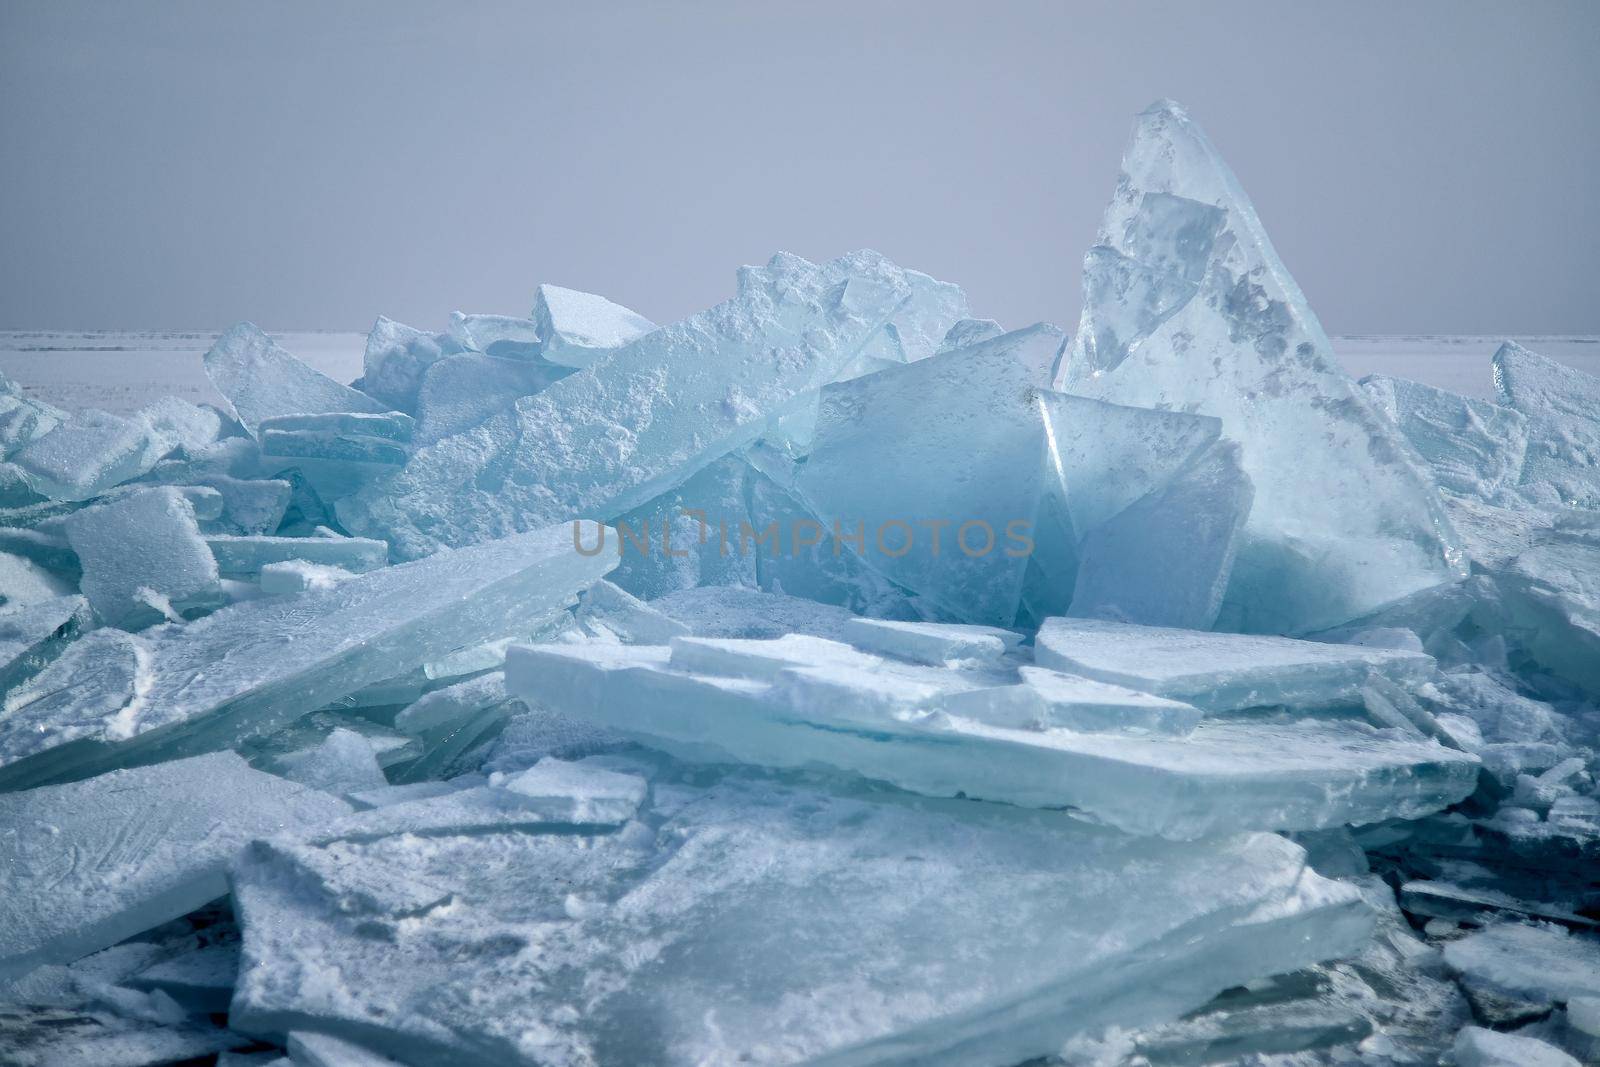 The blocks of ice at Lake Kapchagai, Kazakhstan